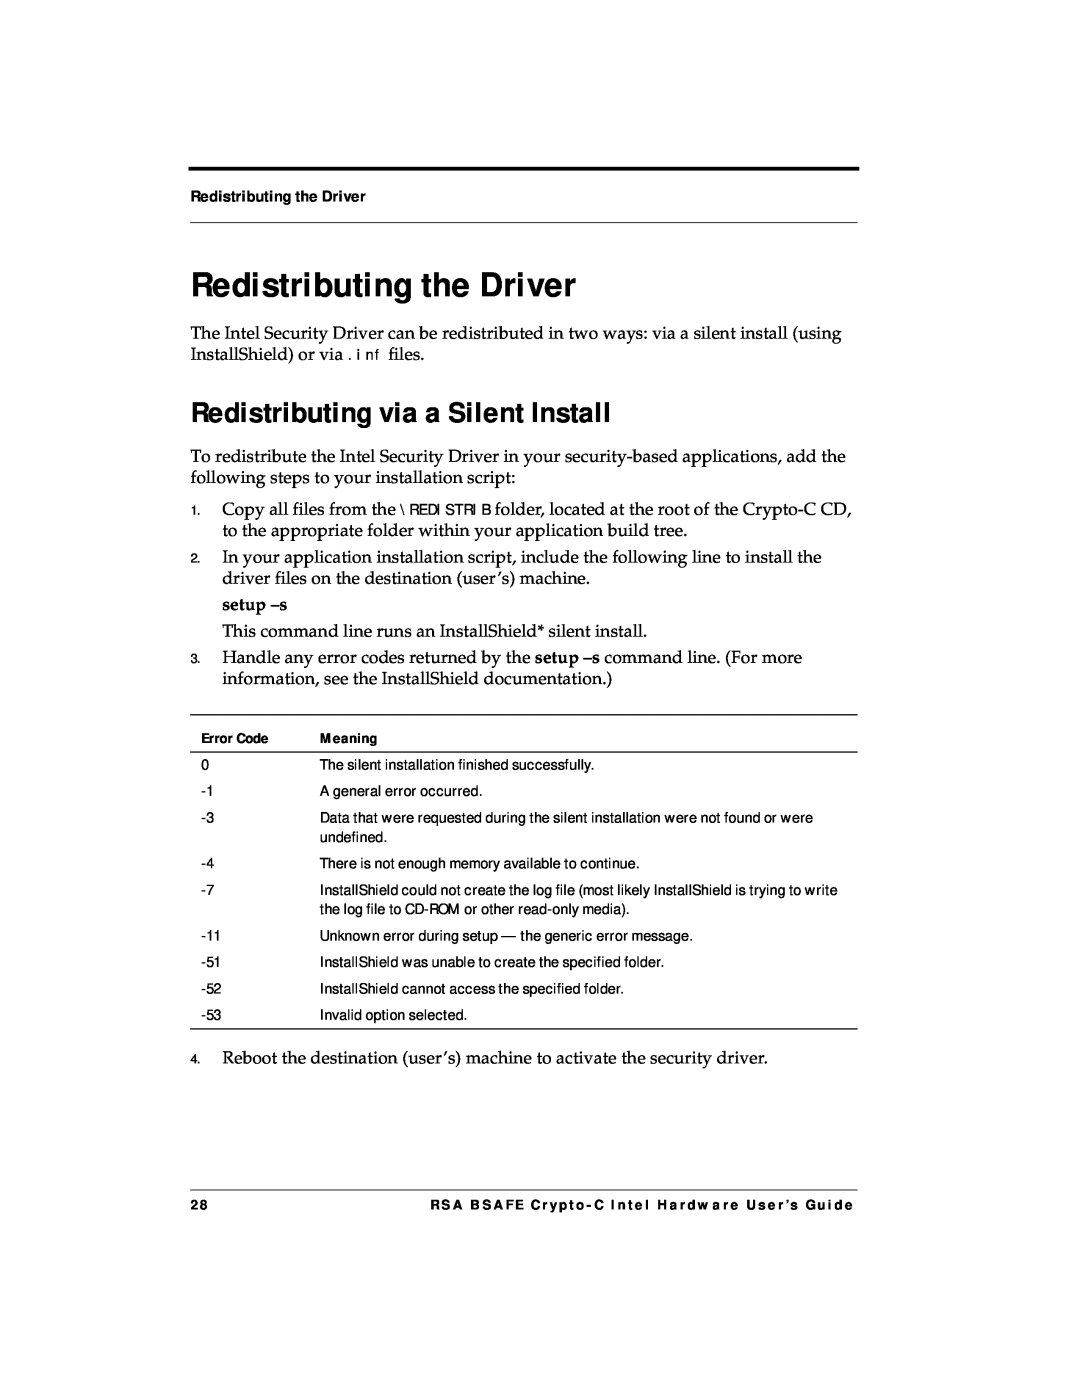 RSA Security 4.3 manual Redistributing the Driver, Redistributing via a Silent Install, setup -s 